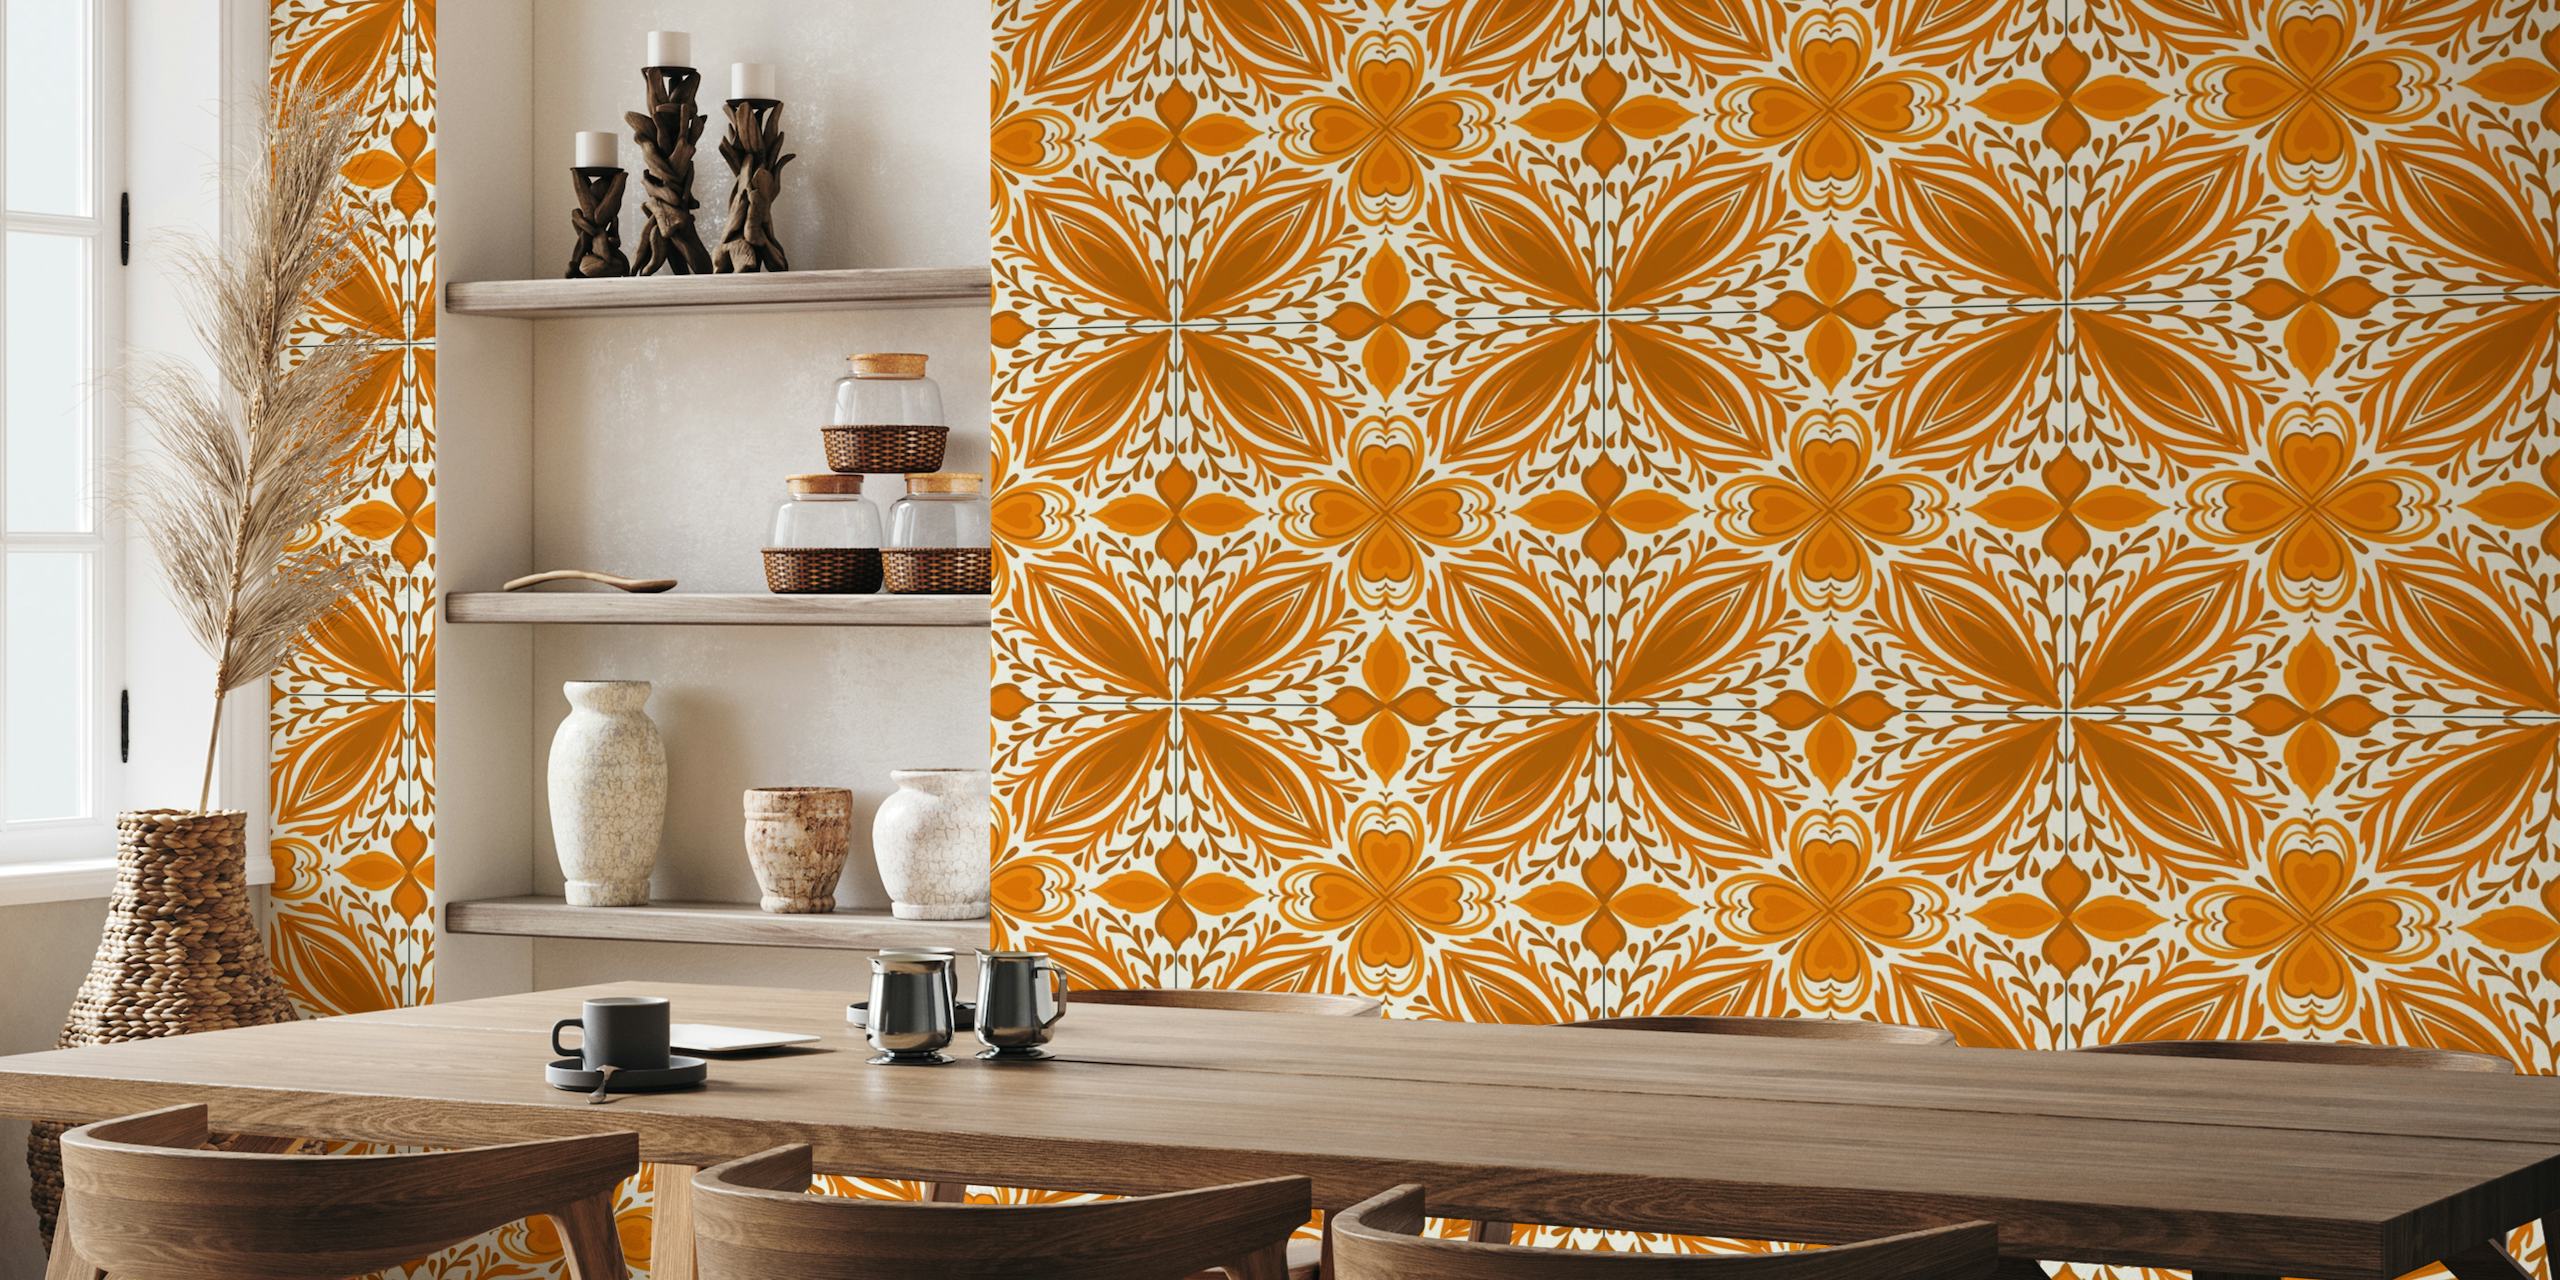 Ornate tiles, yellow and orange 4 papiers peint